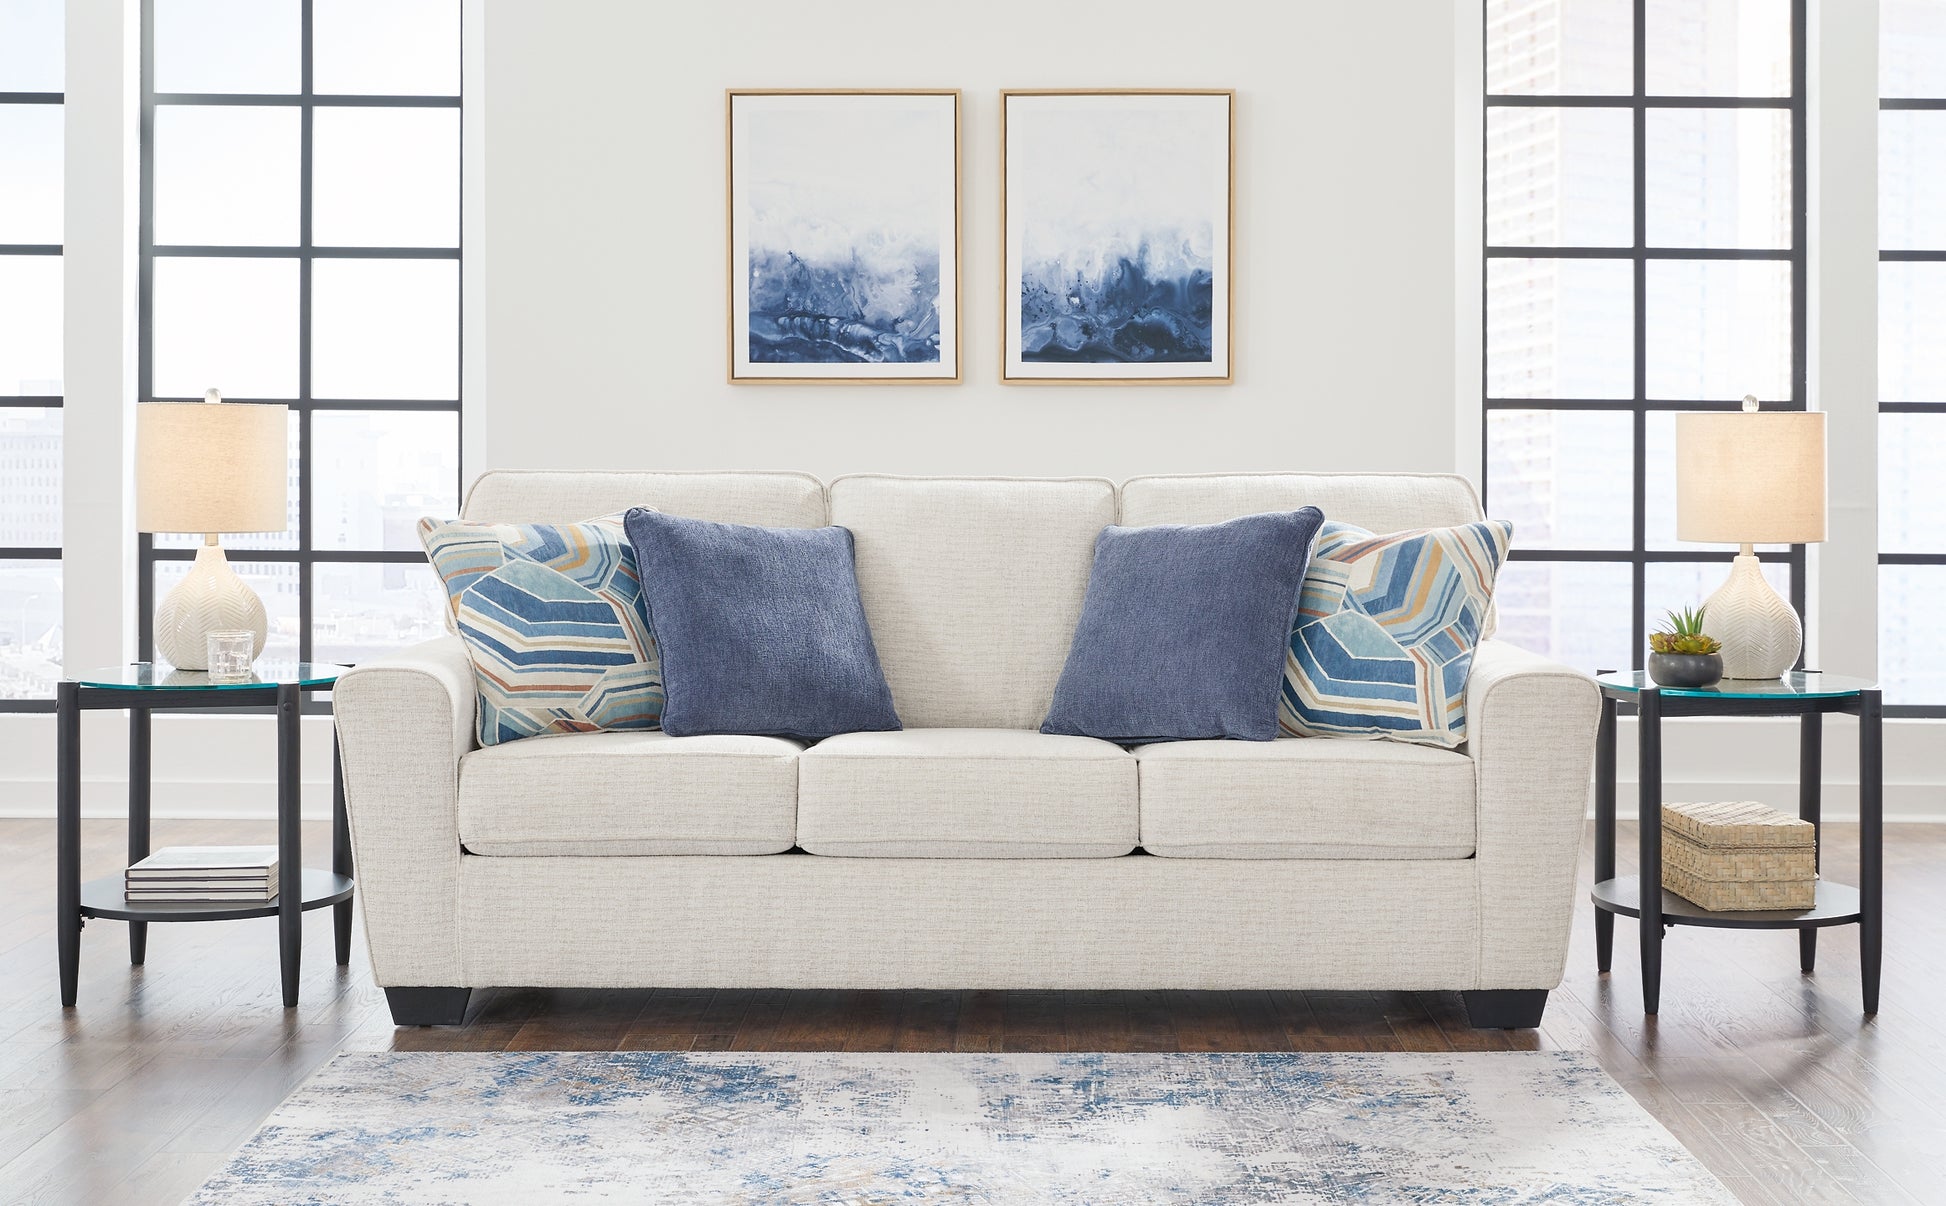 Cashton Queen Sofa Sleeper Signature Design by Ashley®